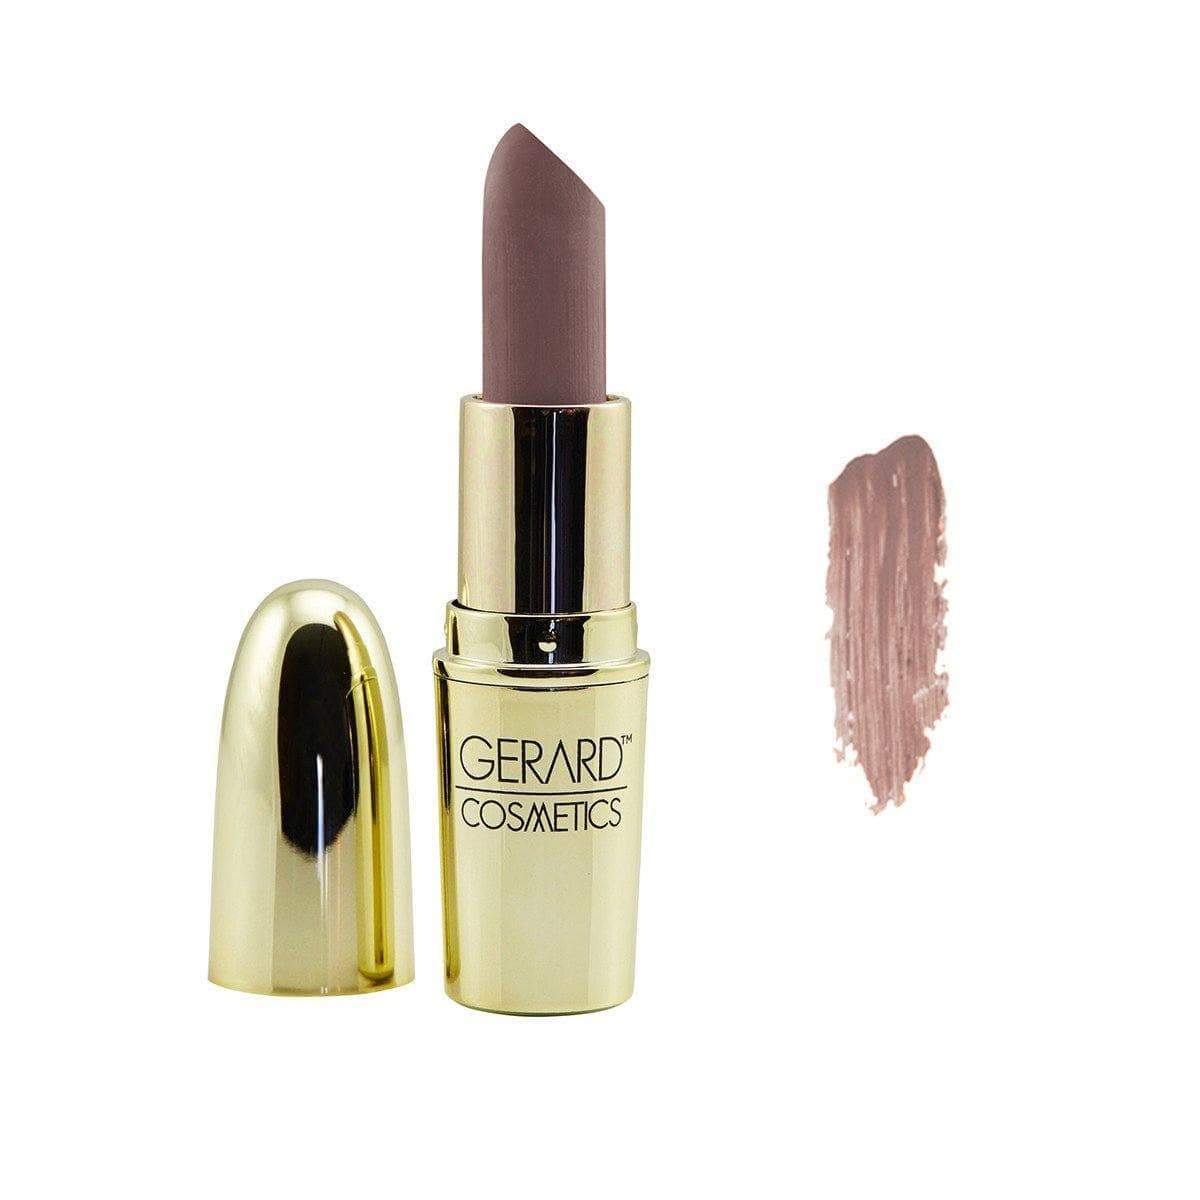 Gerard Cosmetics Lipstick - Mystic Moon 4g, lipstick, London Loves Beauty